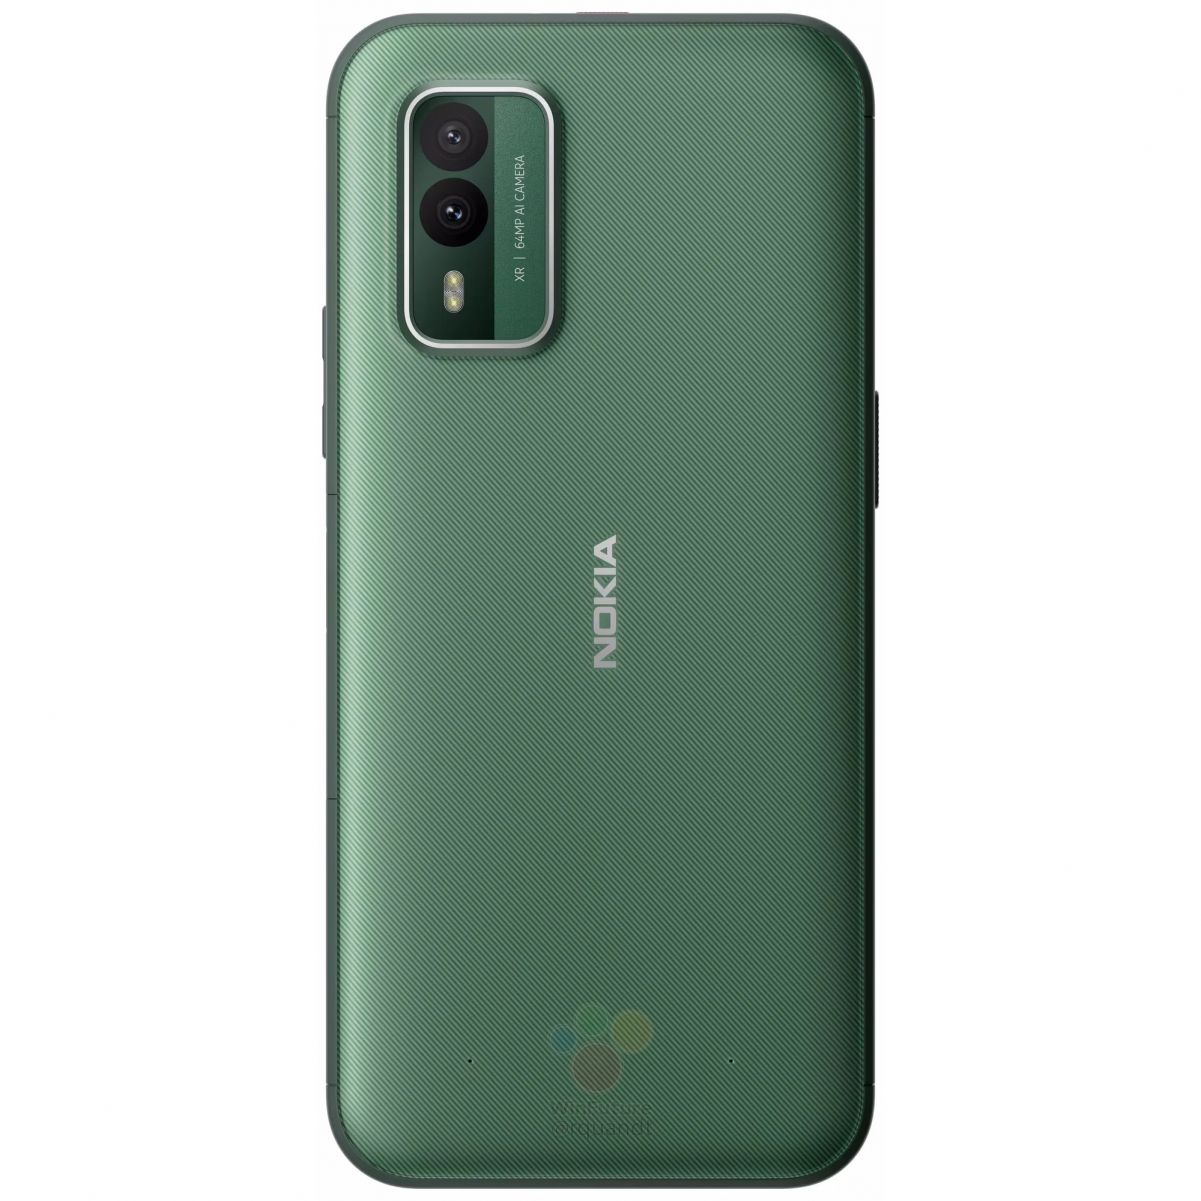 Nokia-Sentry-5G-1682506556-0-0.jpeg